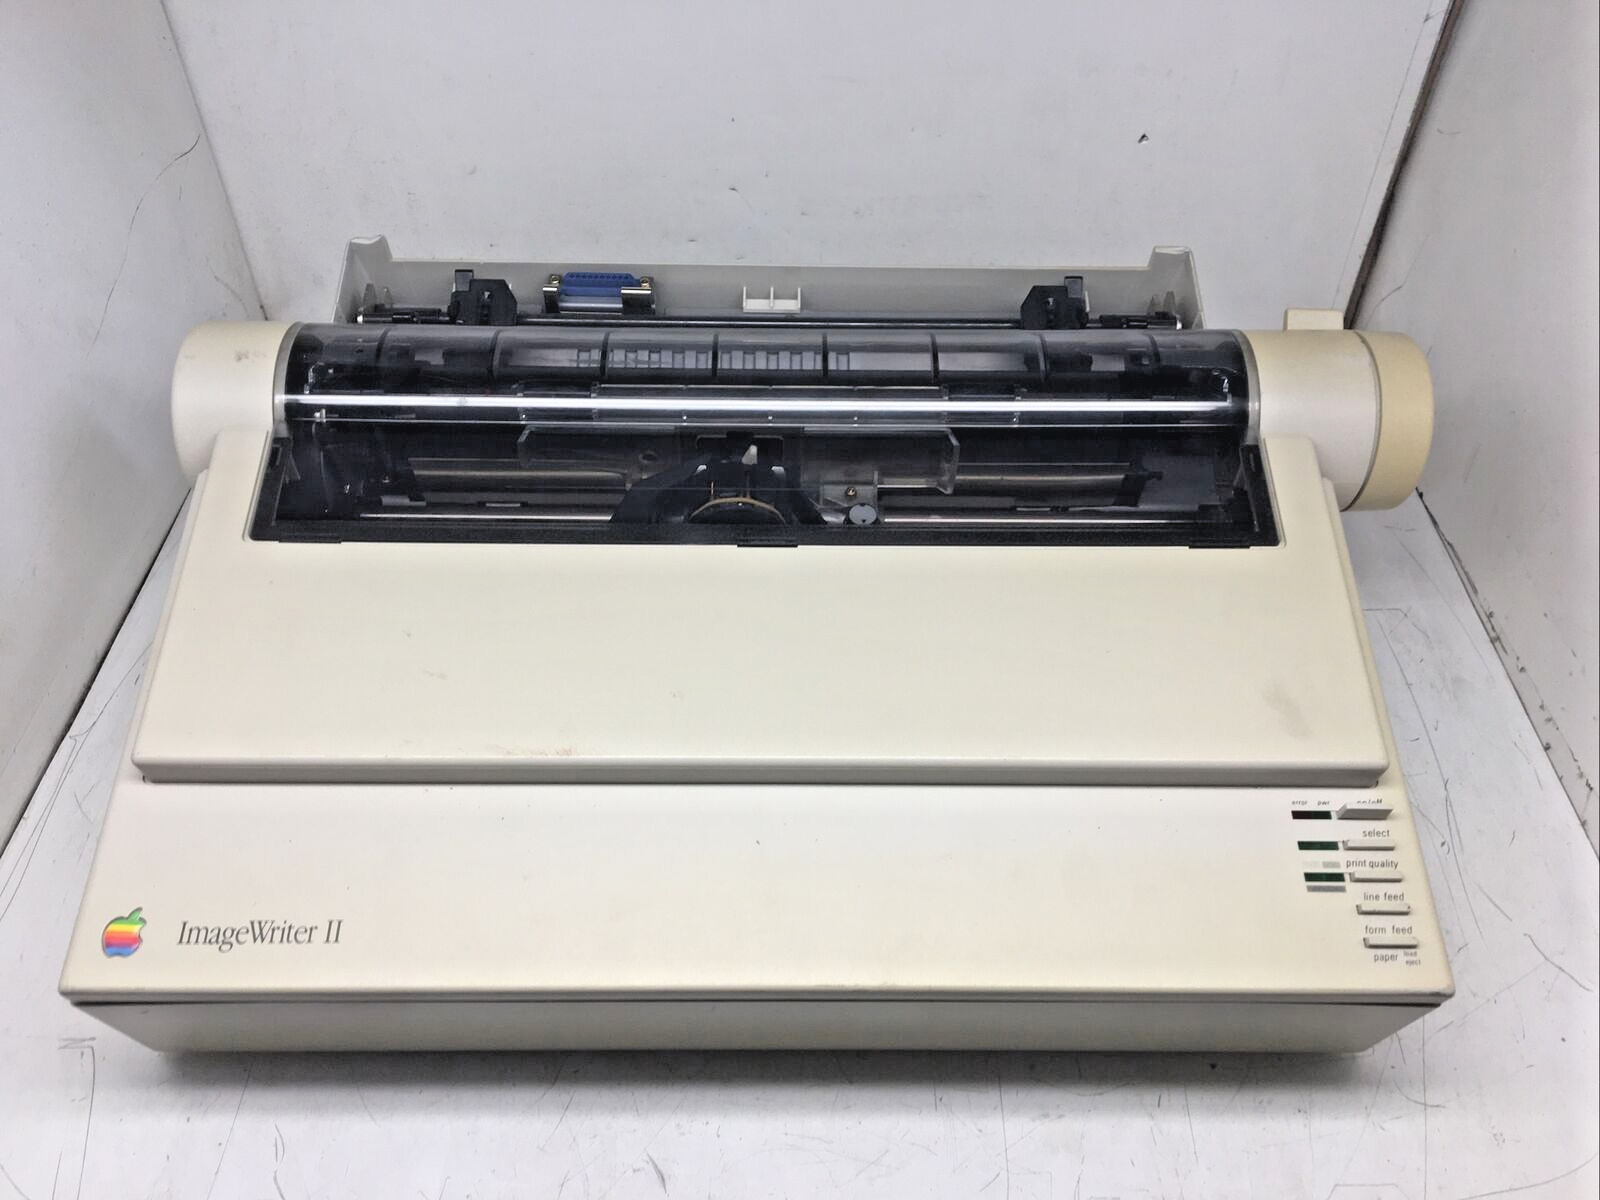 Vintage Apple ImageWriter II Printer A9M0320 missing paper tray